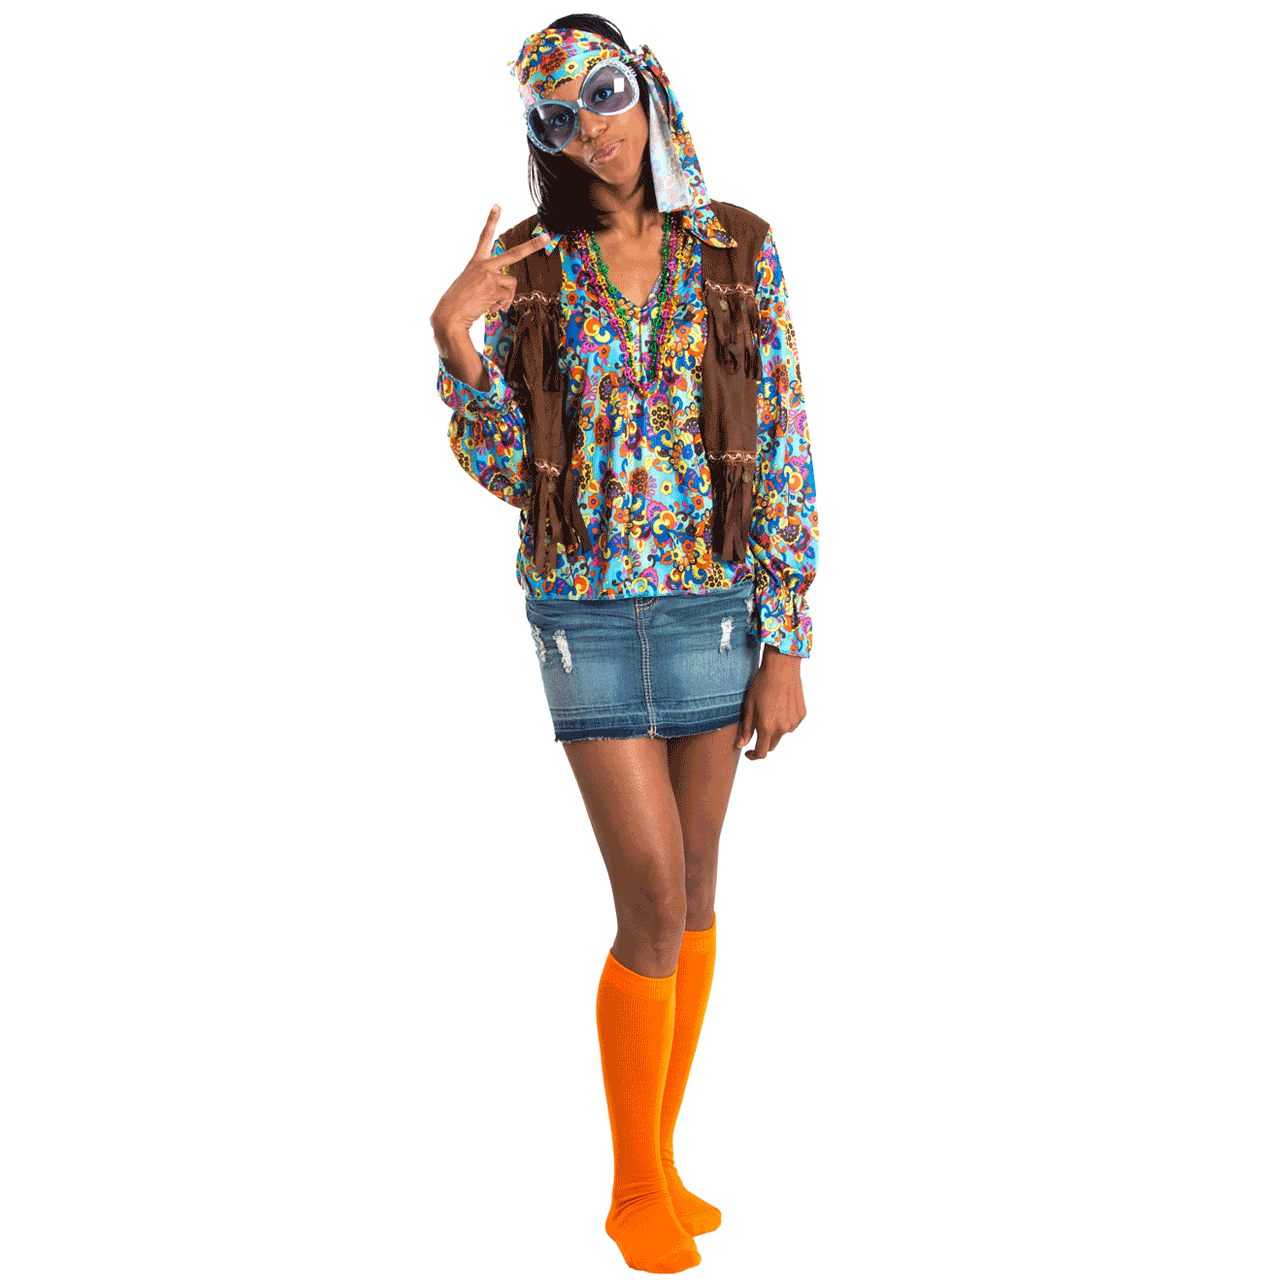 hippy with orange socks